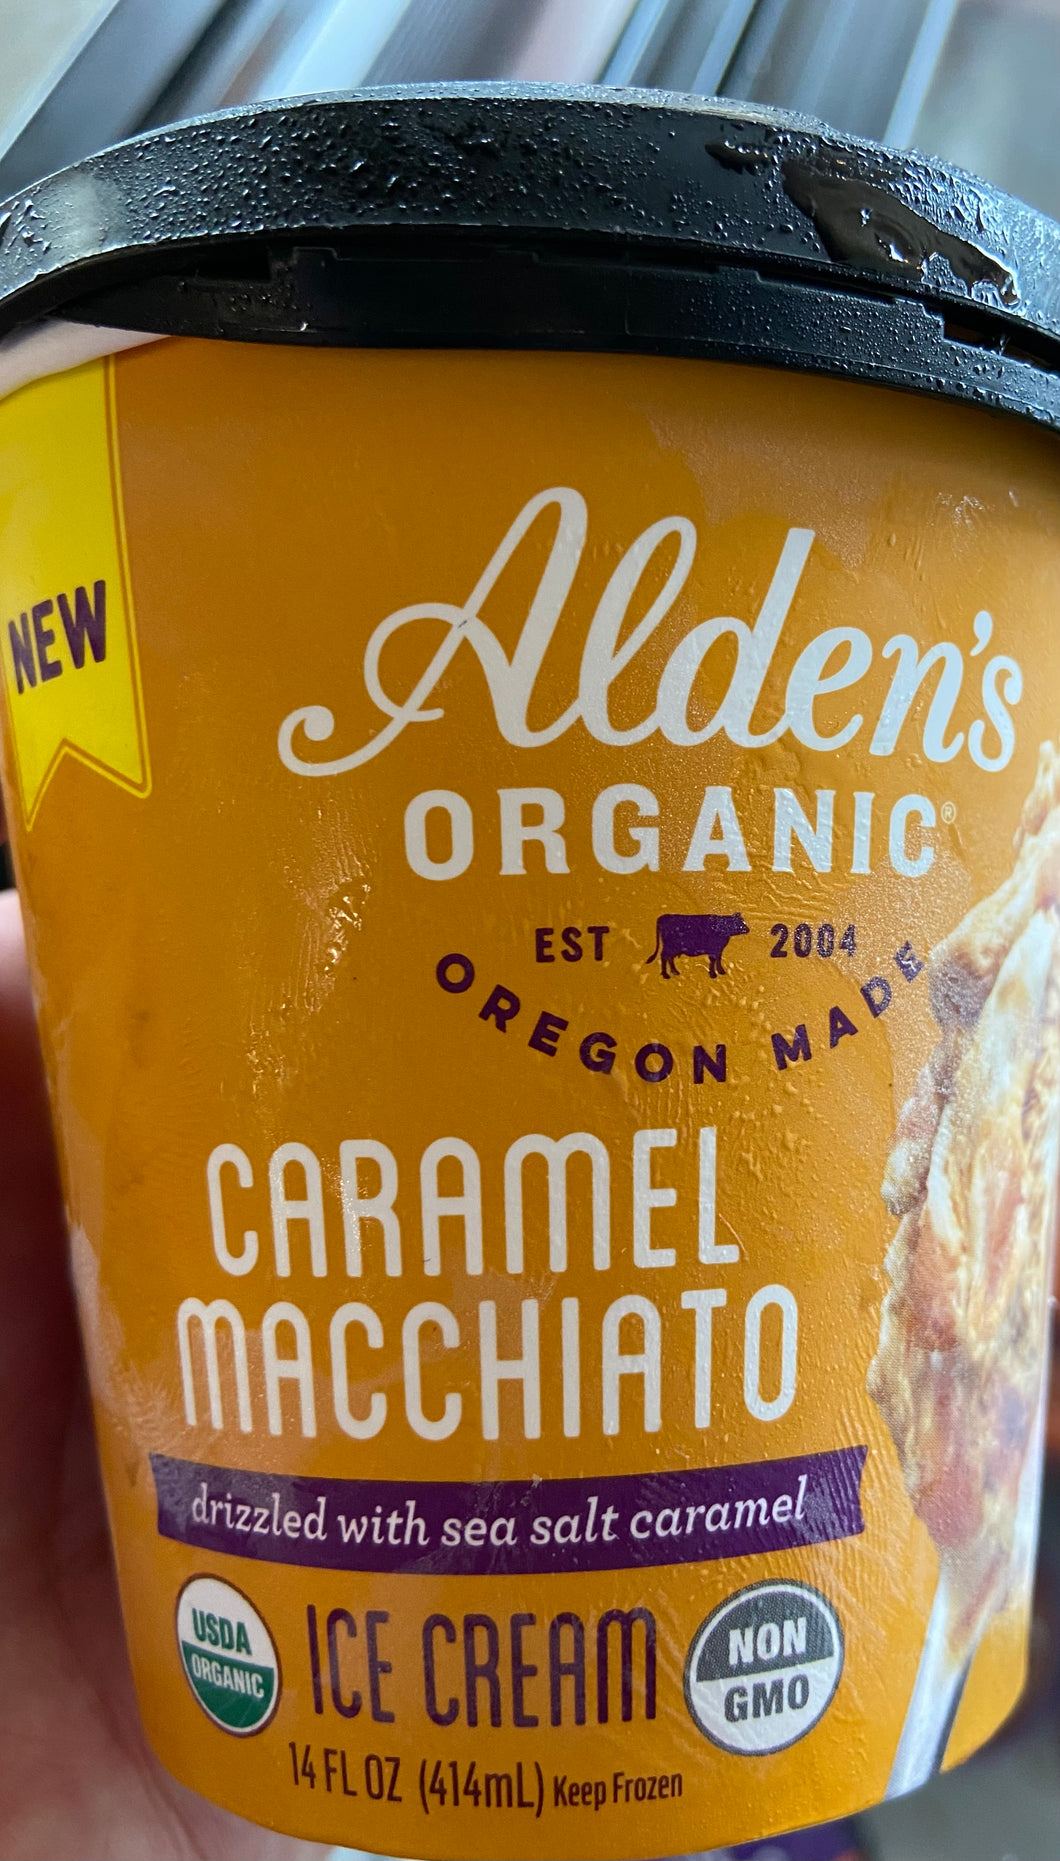 Ice cream caramel macchiato Alden’s organic